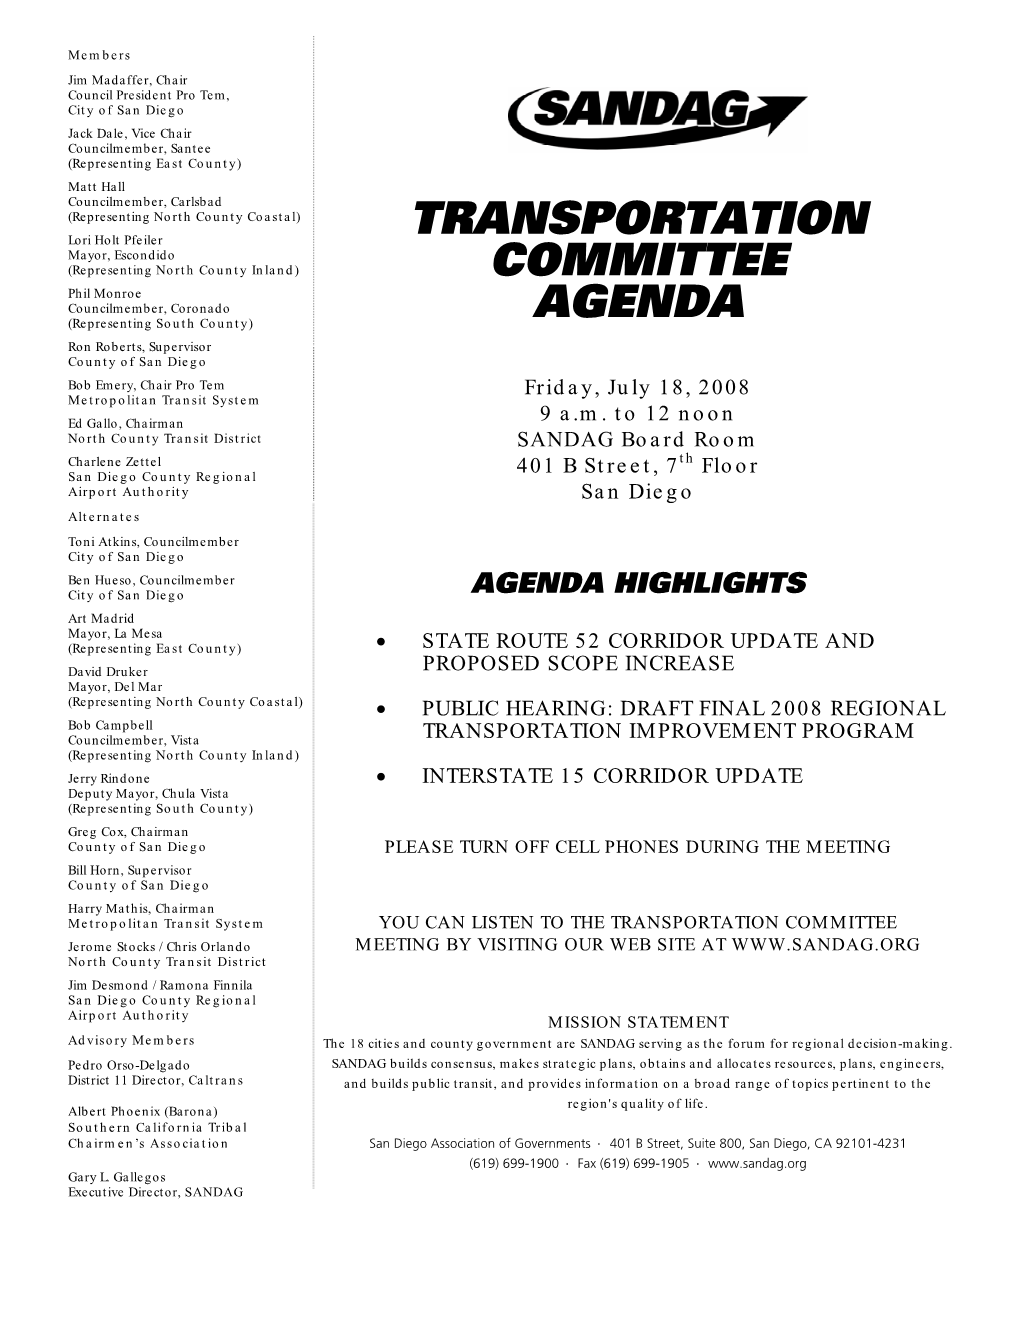 Transportation Committee Agenda